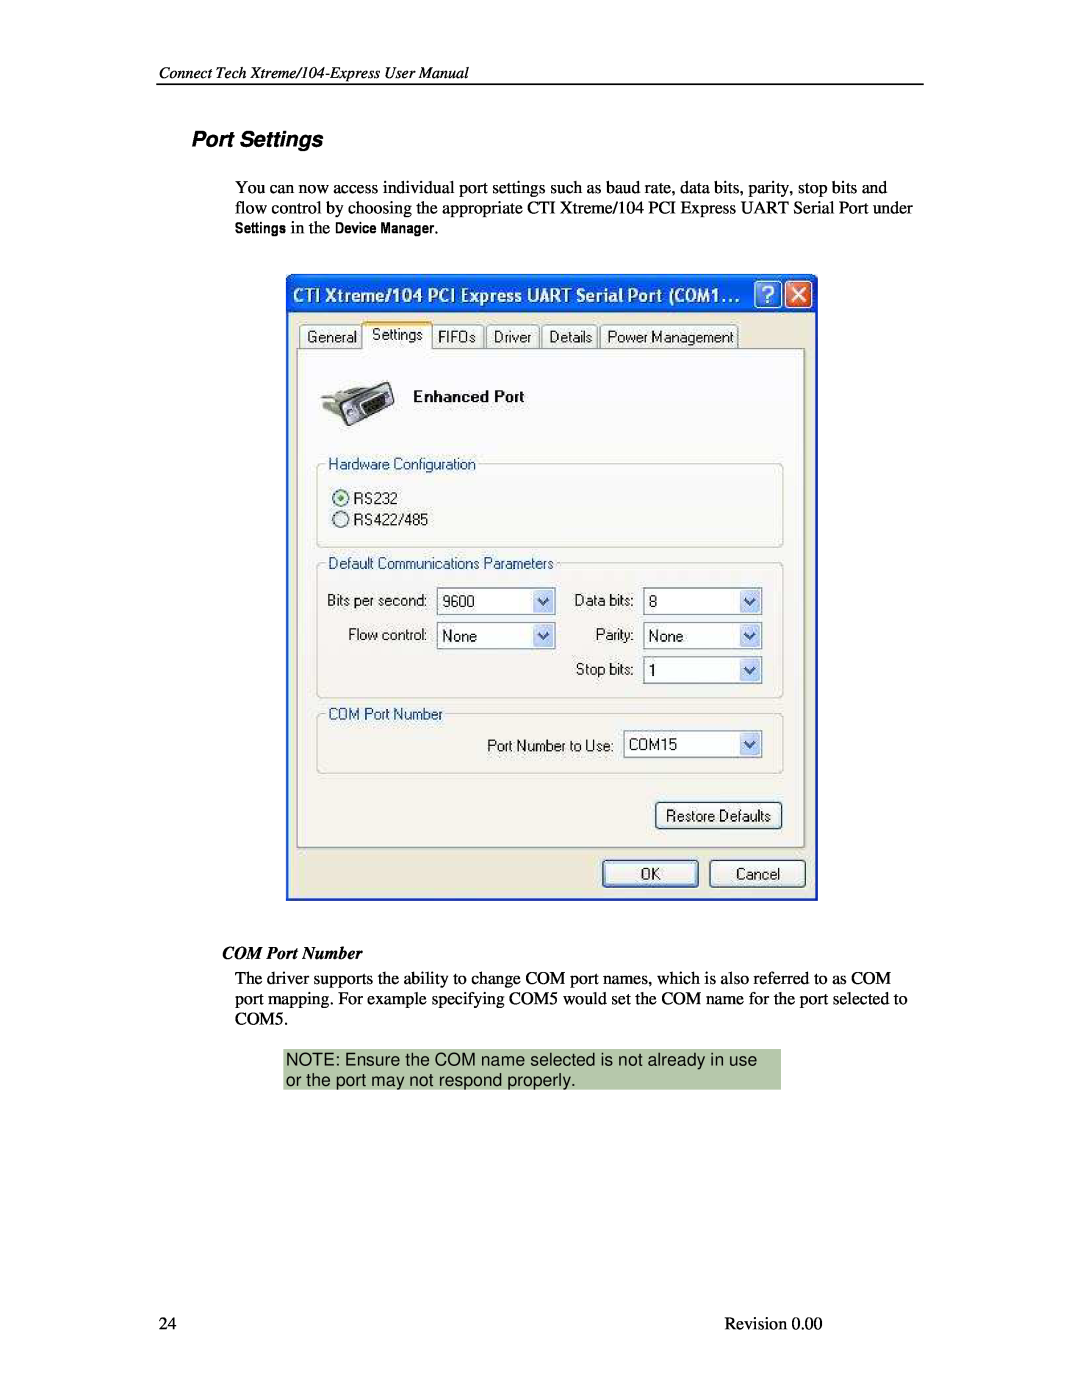 Connect Tech user manual Port Settings, COM Port Number, Connect Tech Xtreme/104-Express User Manual 